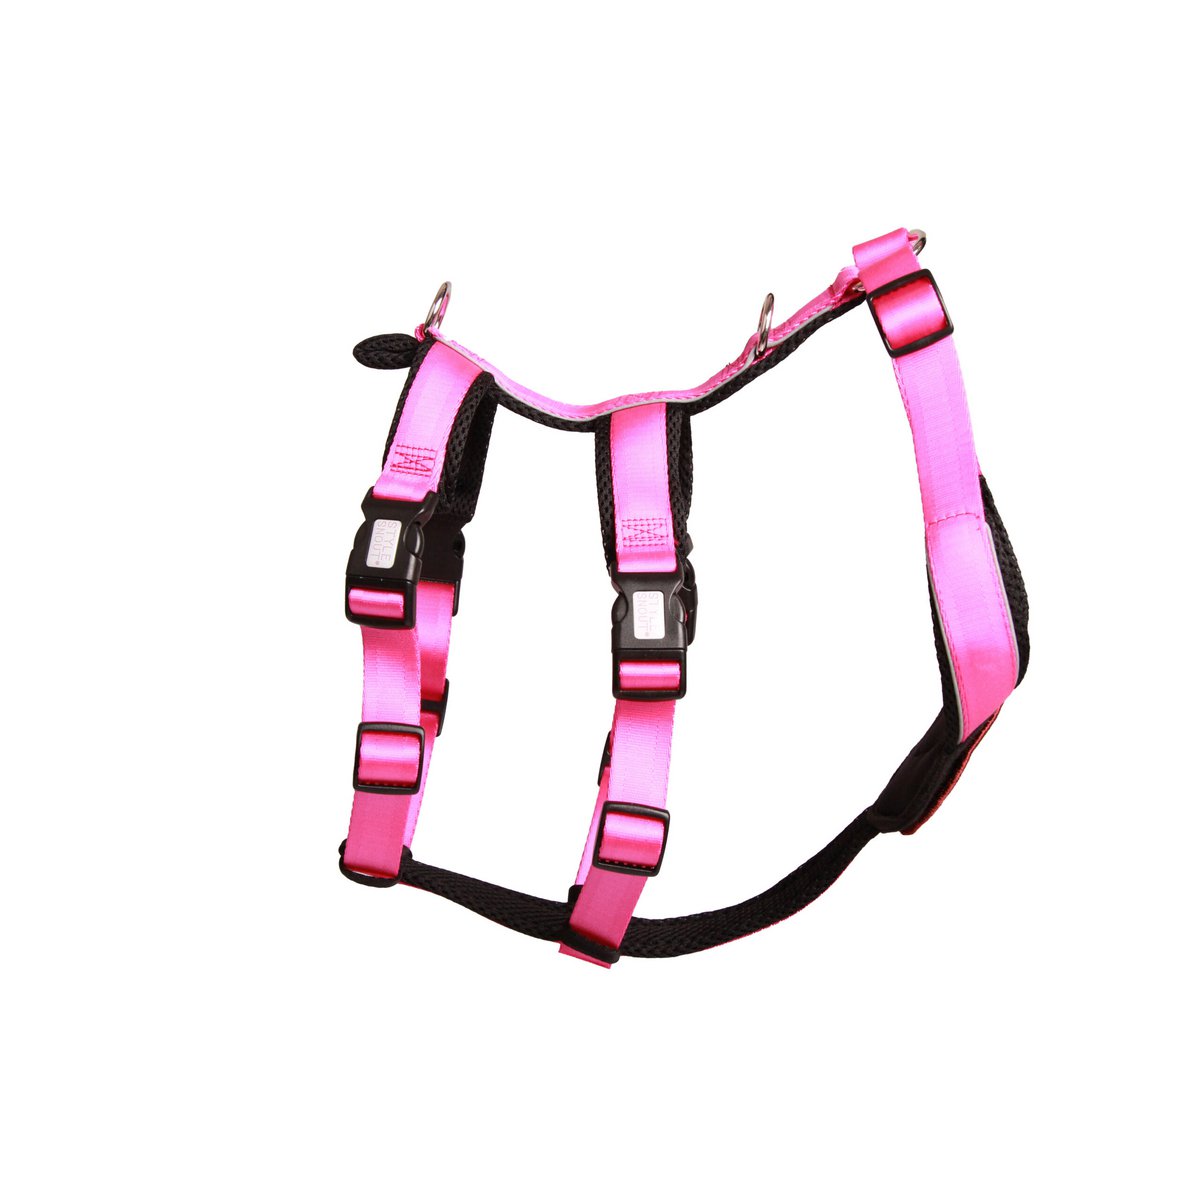 Safety harness - Patch&amp;Safe - Pink-Black